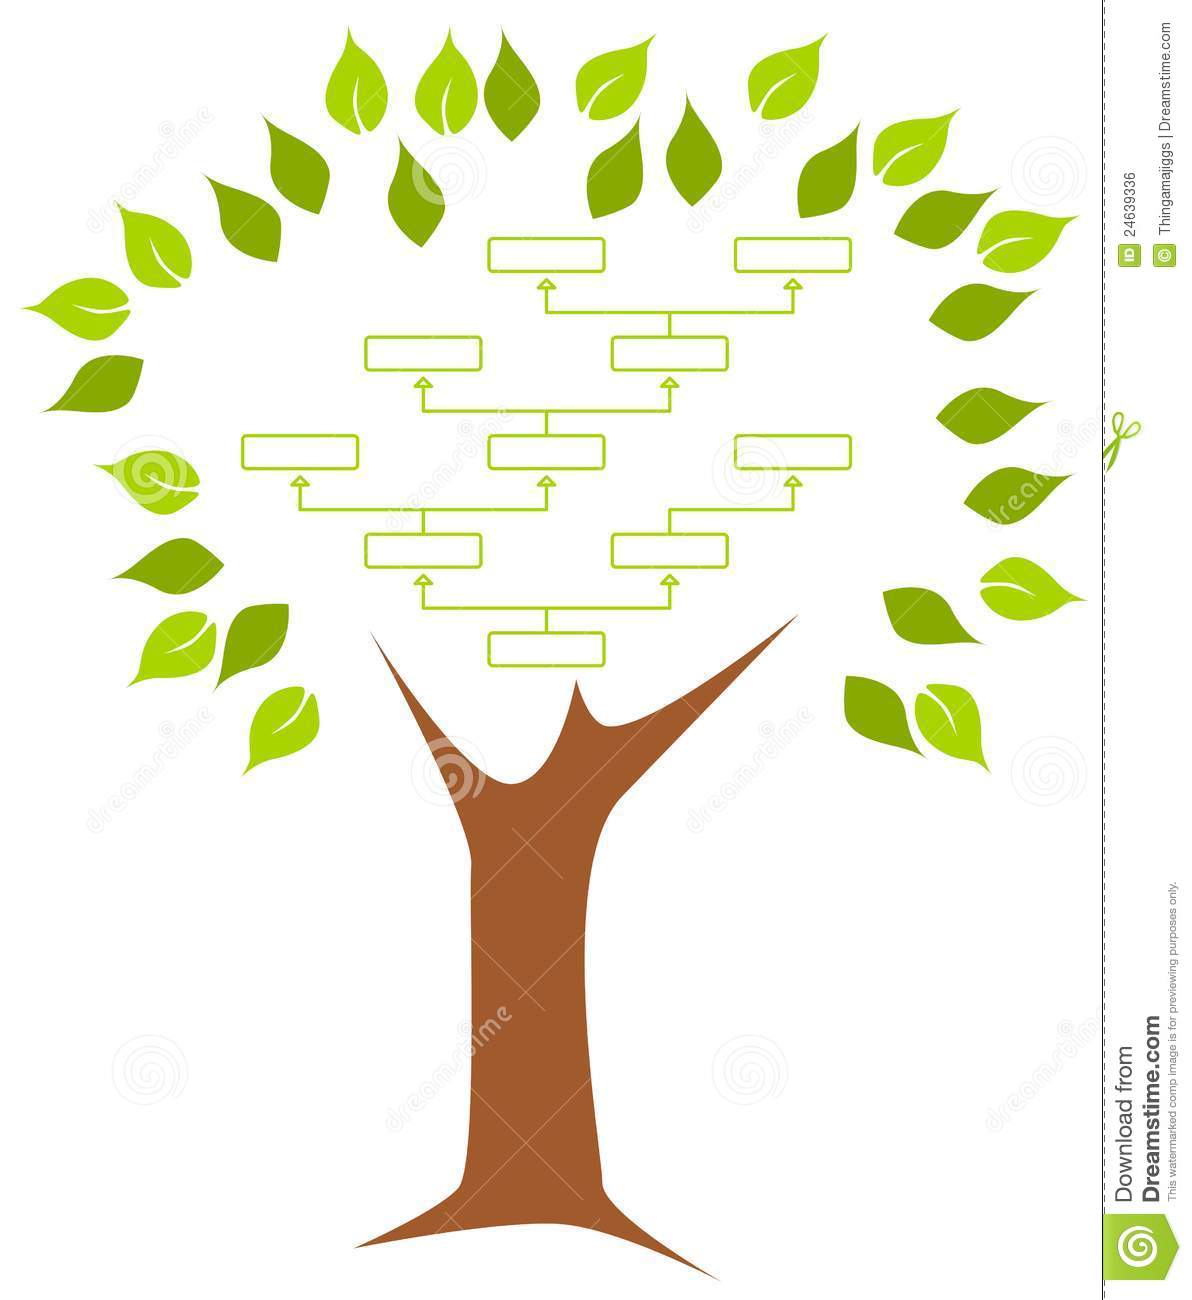 Decision Tree Royalty Free Stock Image   Image  24639336